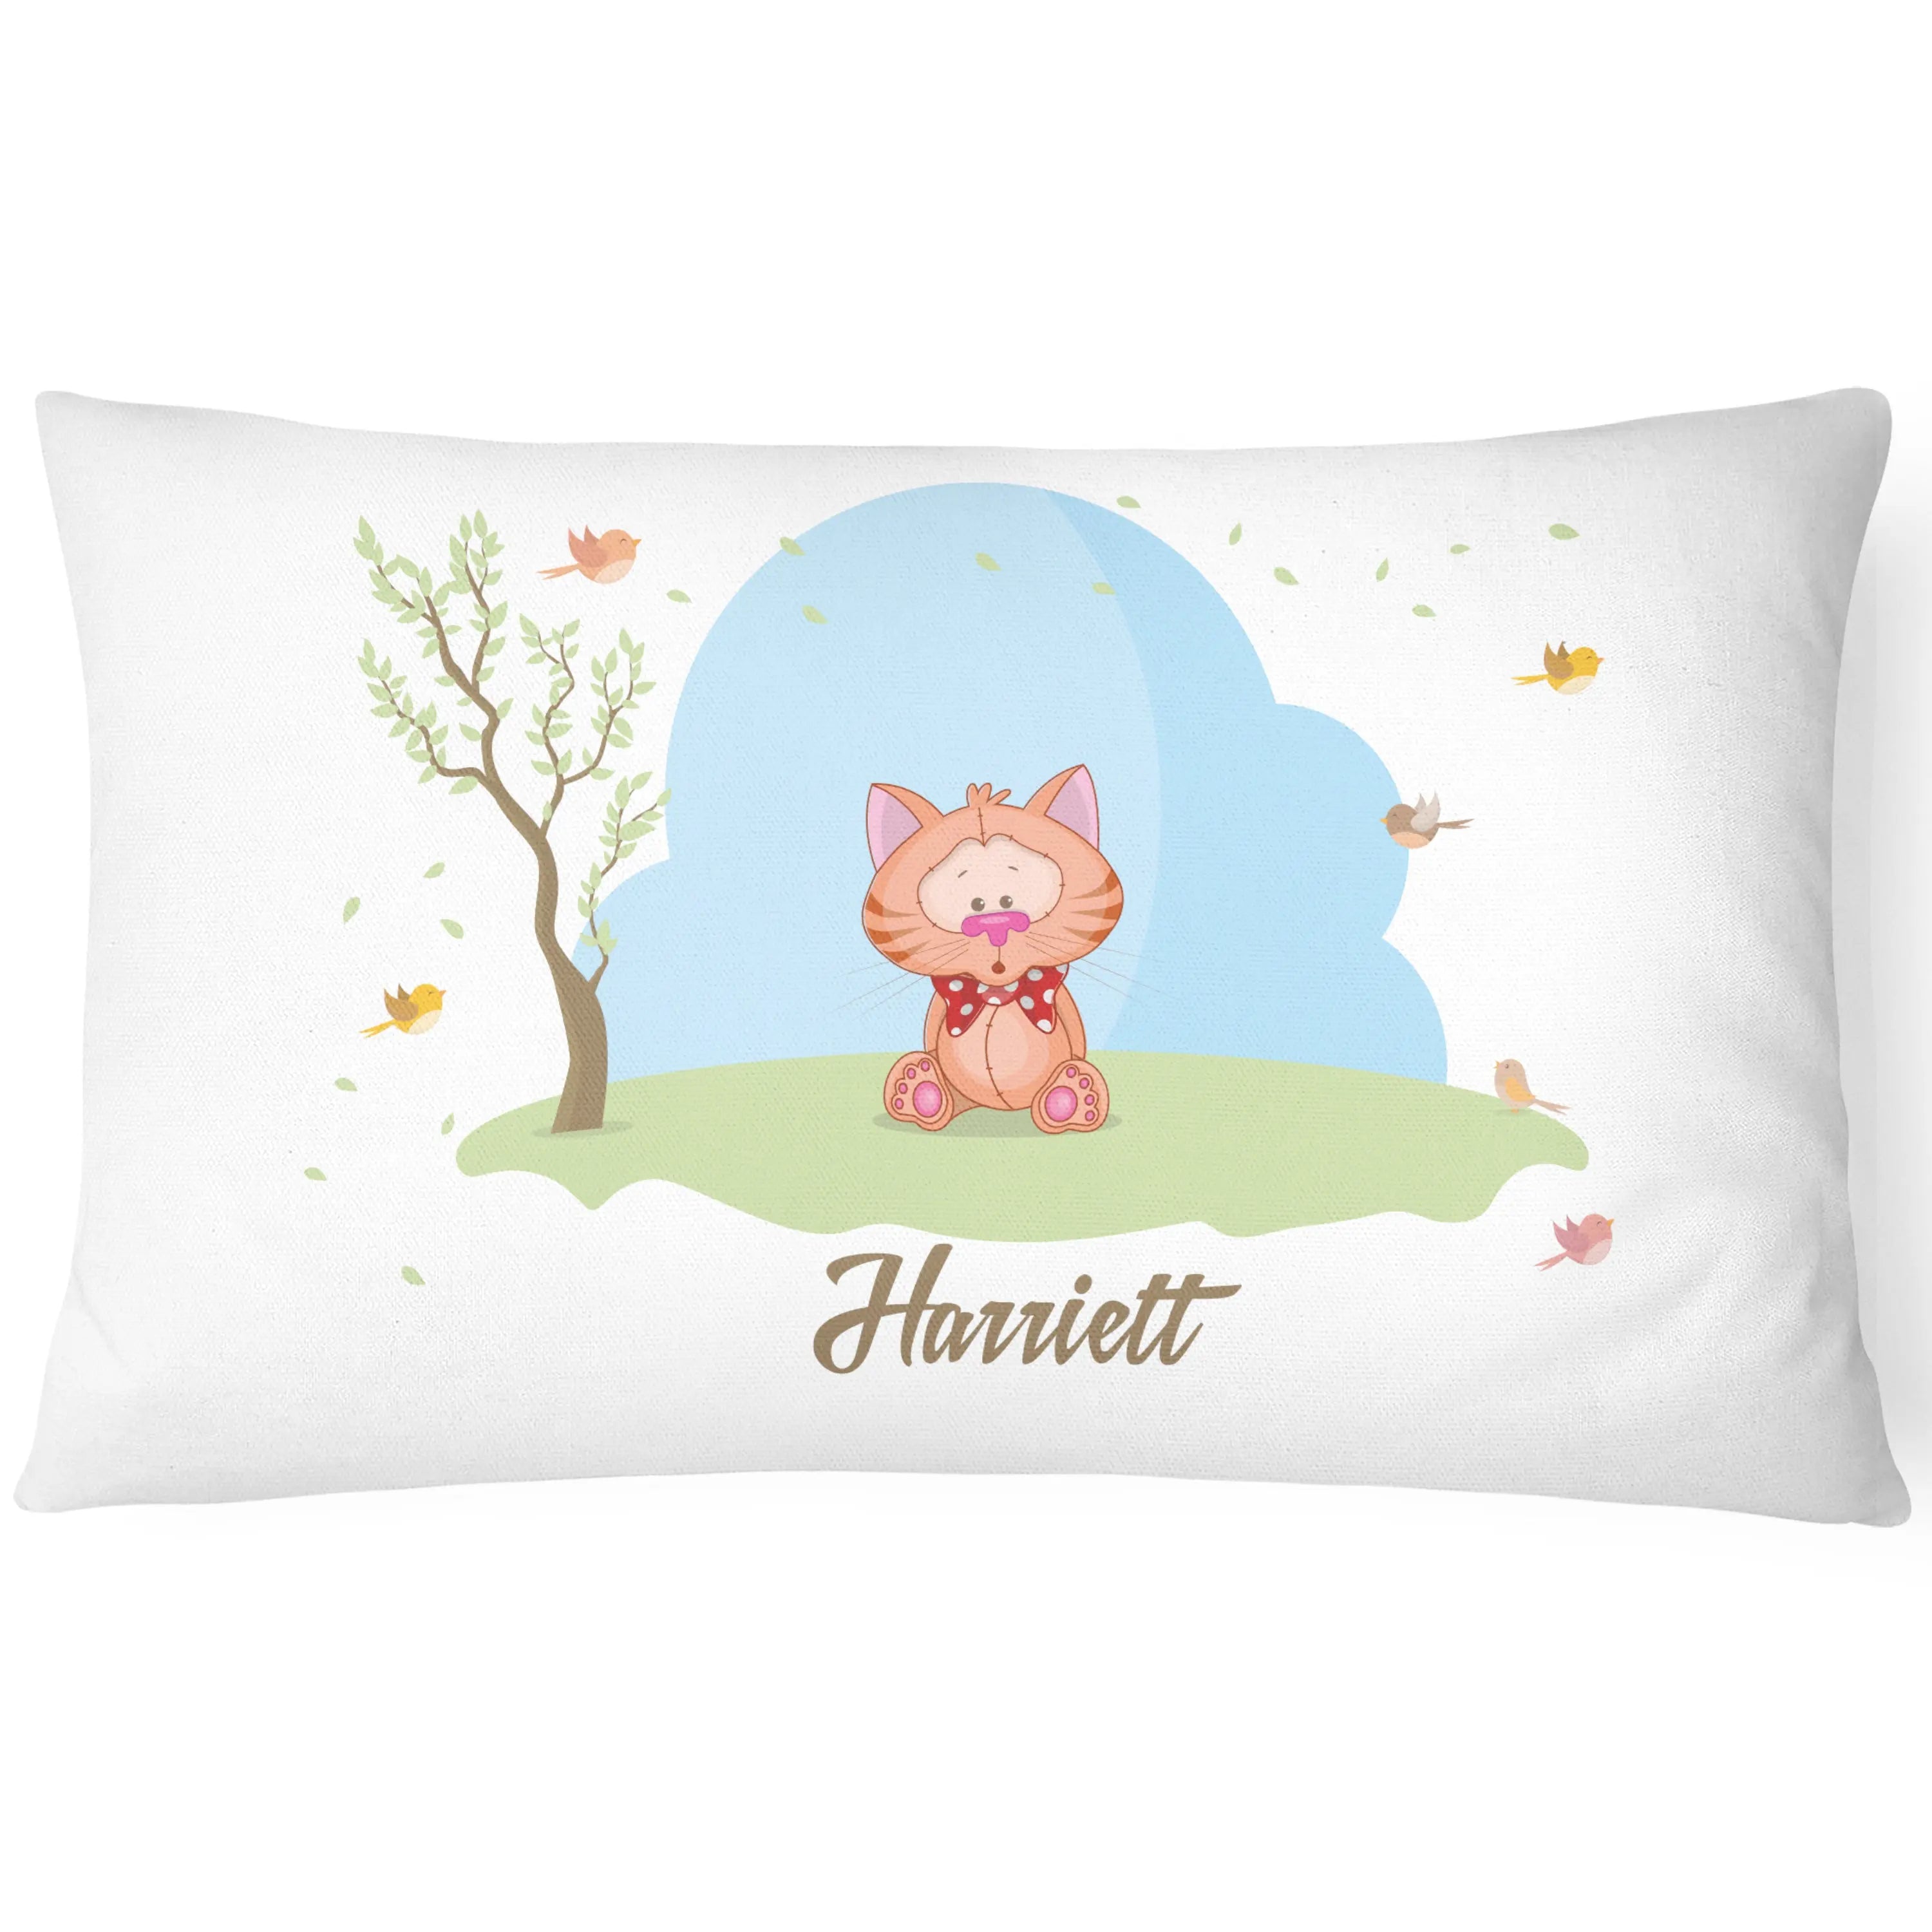 Personalised Children's Pillowcase Cute Animal - Enchanting - CushionPop